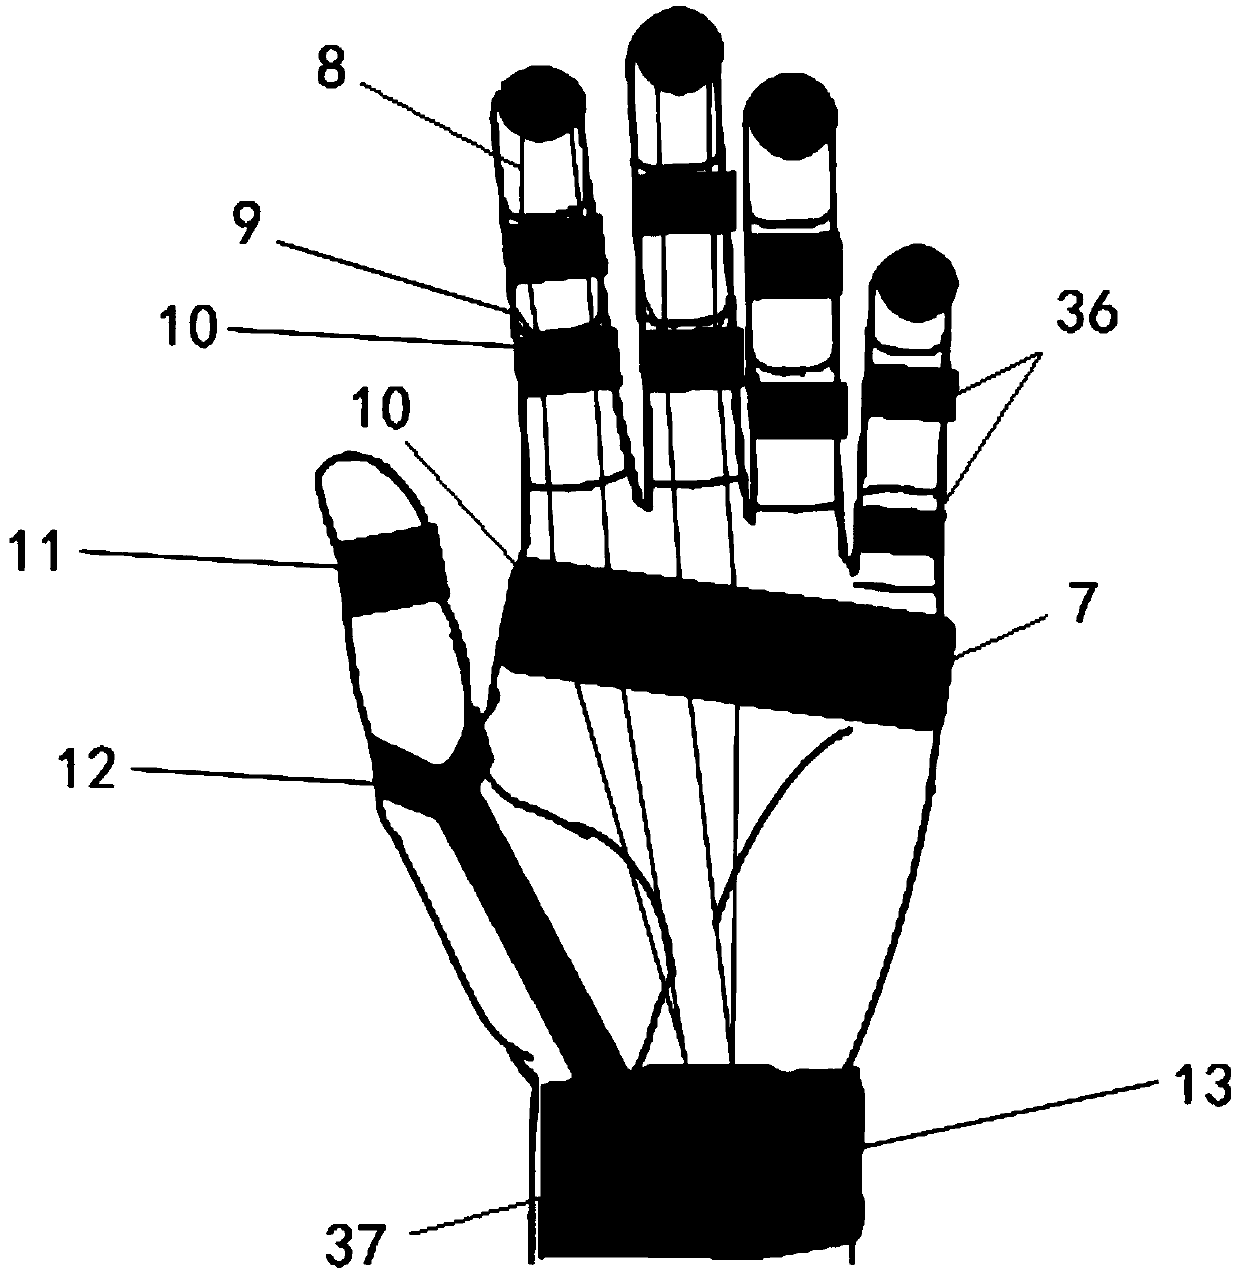 Flexible exoskeleton glove device